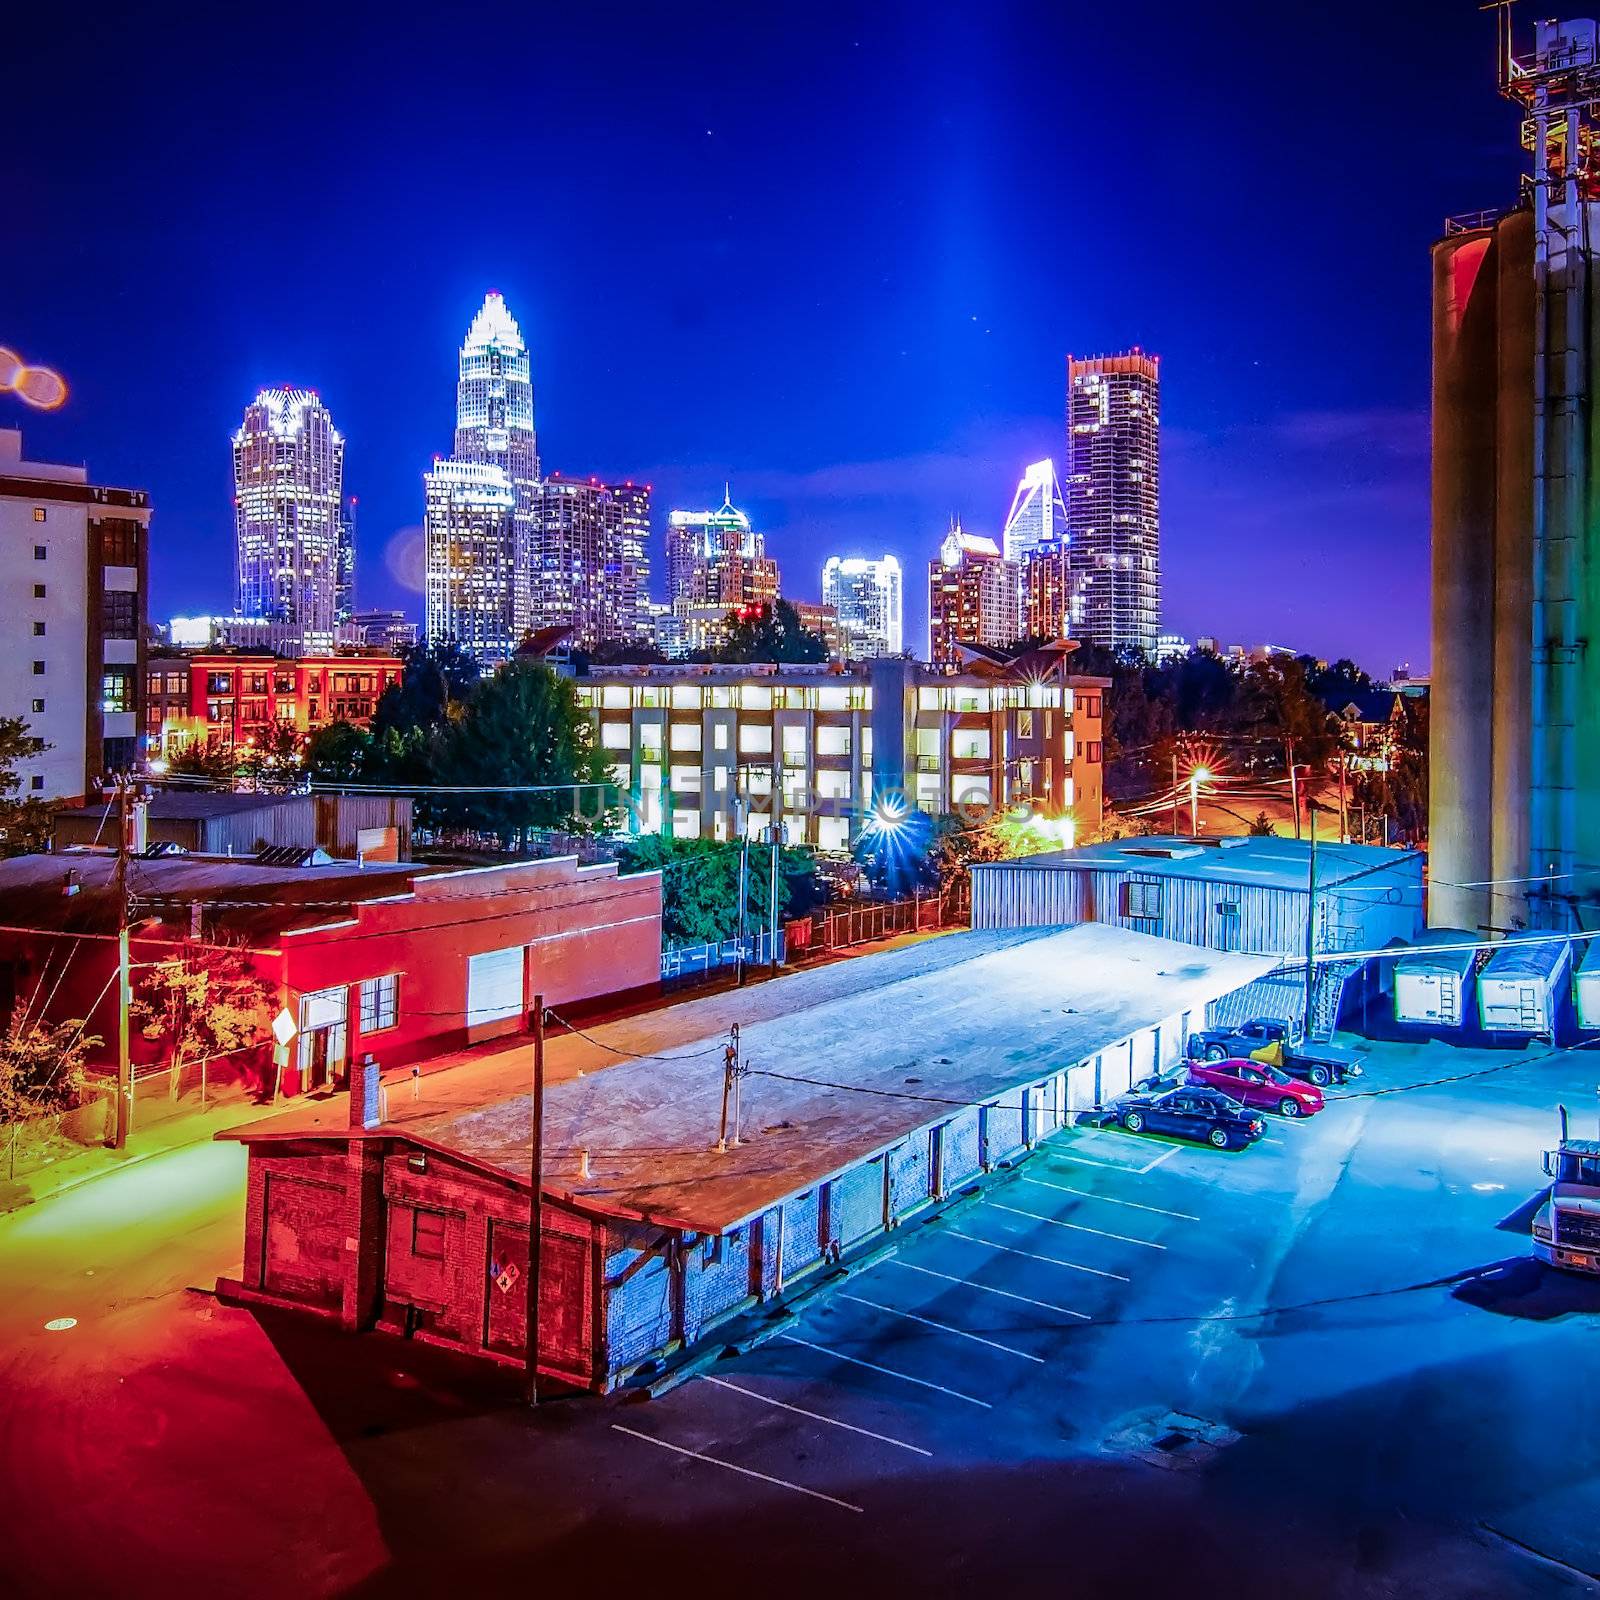 Charlotte City Skyline night scene by digidreamgrafix